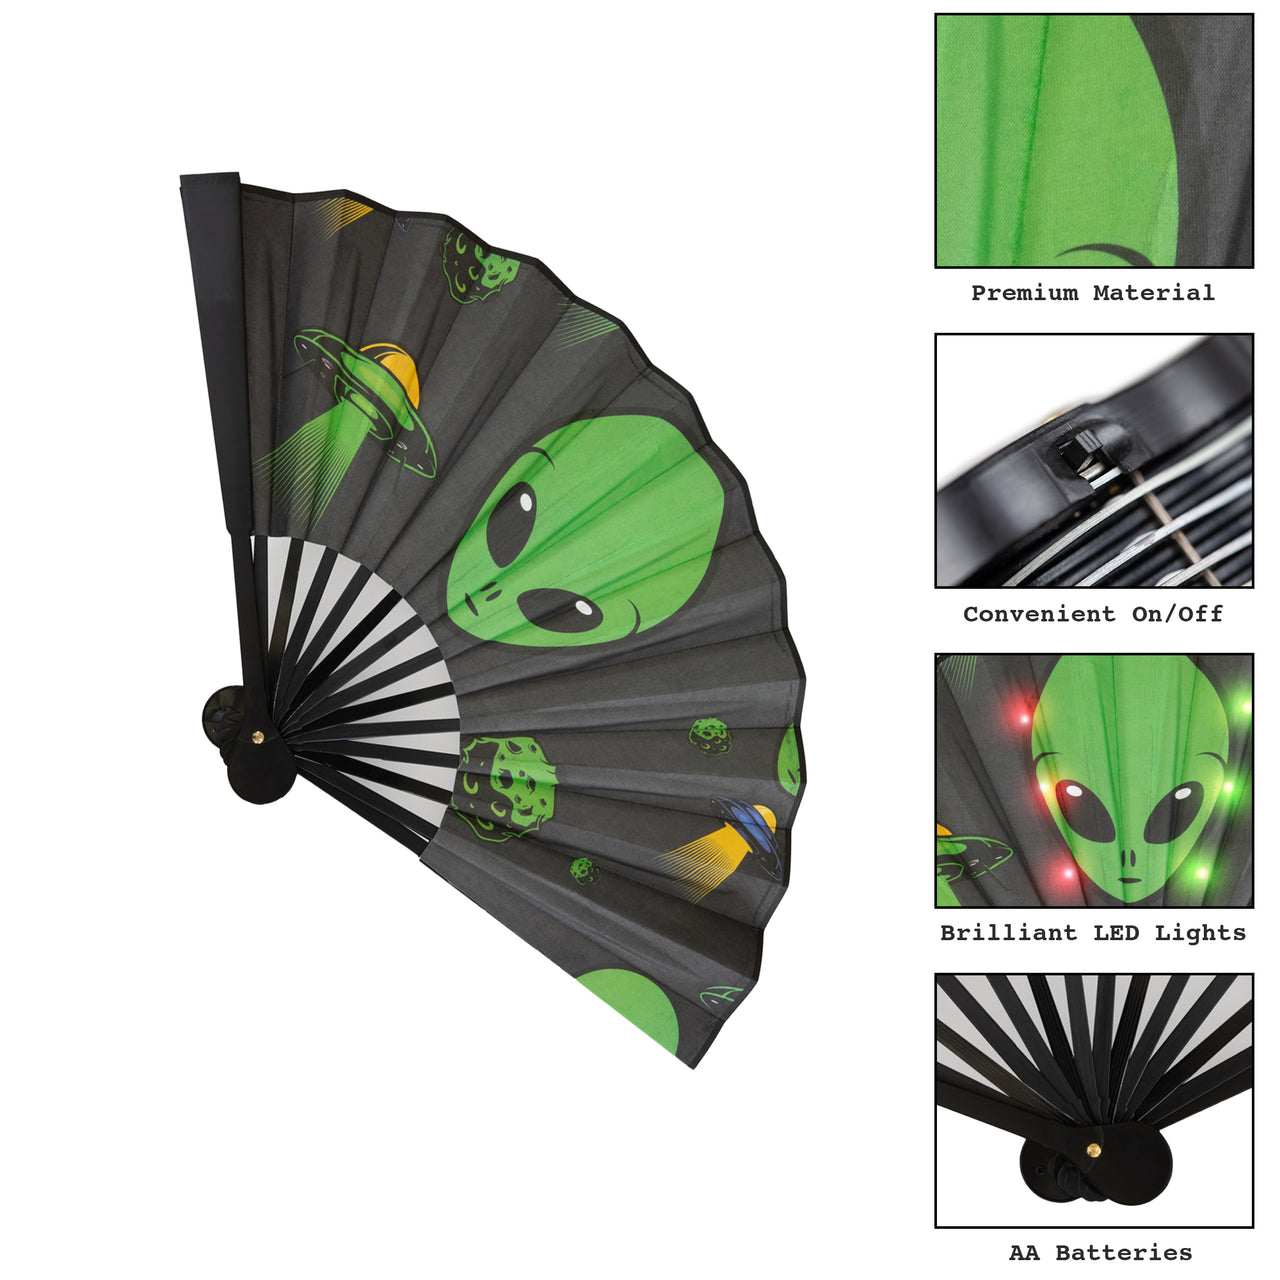 LED Hand Fan - "Alien Invasion" - Foldable & Portable with Alien Design